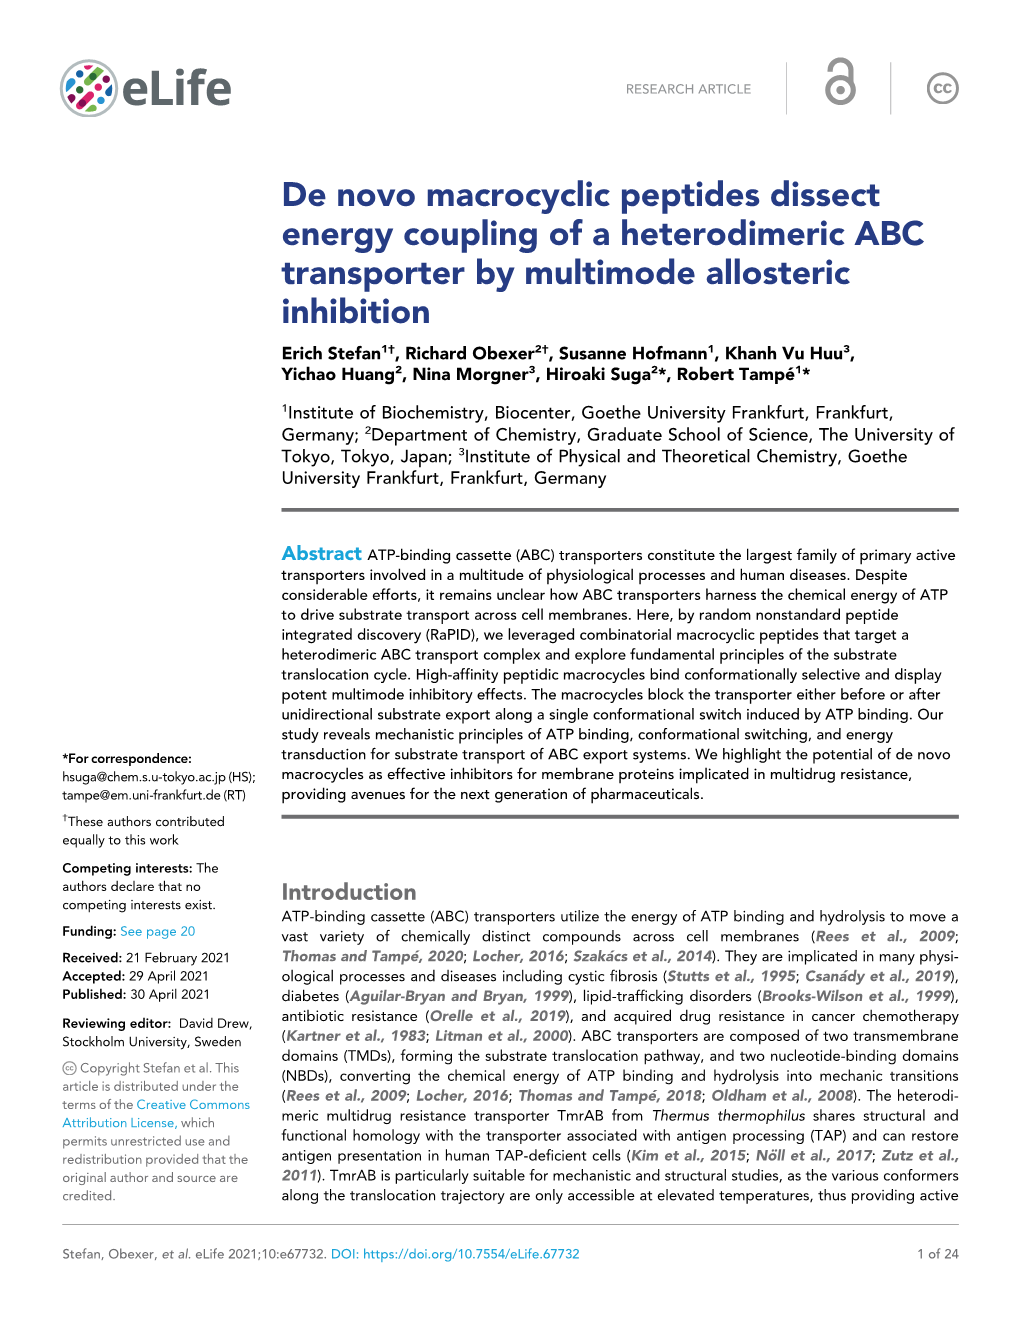 De Novo Macrocyclic Peptides Dissect Energy Coupling of a Heterodimeric